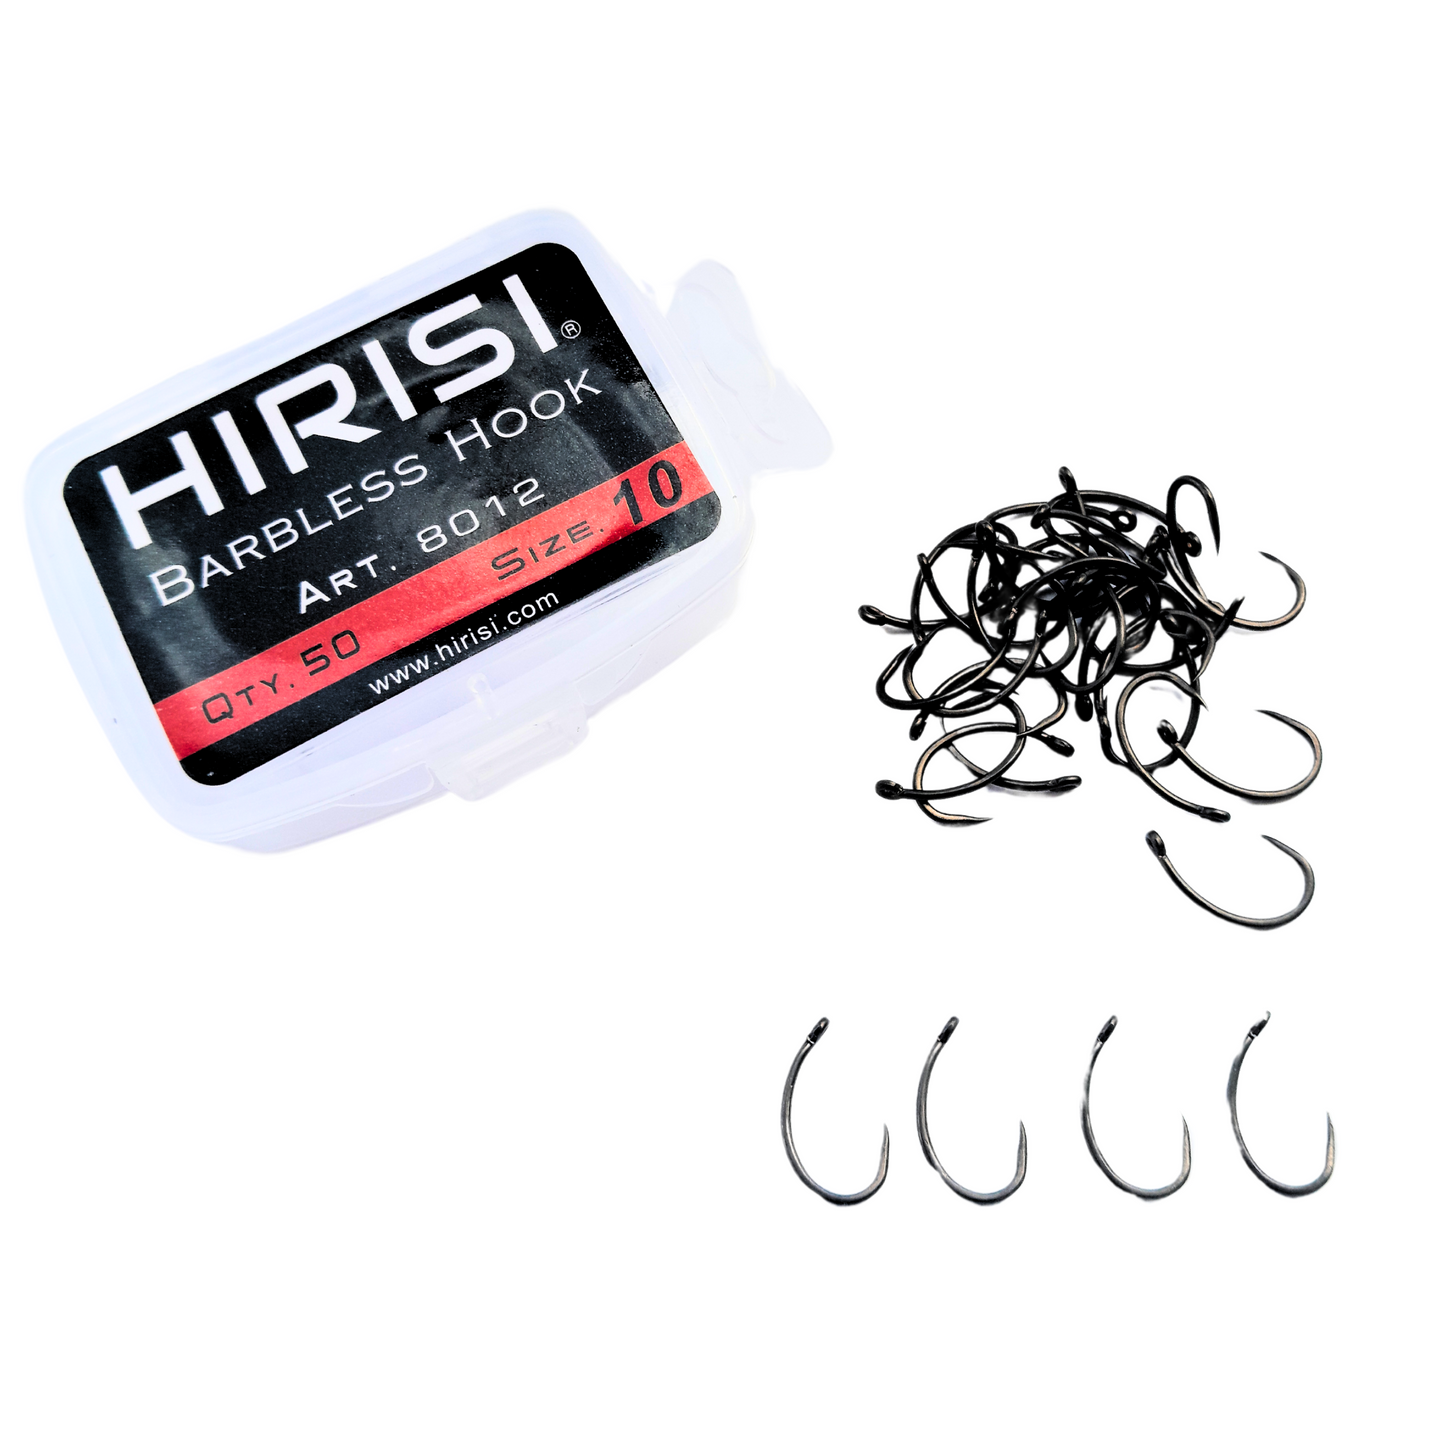 Hirisi Carbon Steel Hooks 8012 | 50 Pieces | No. 10